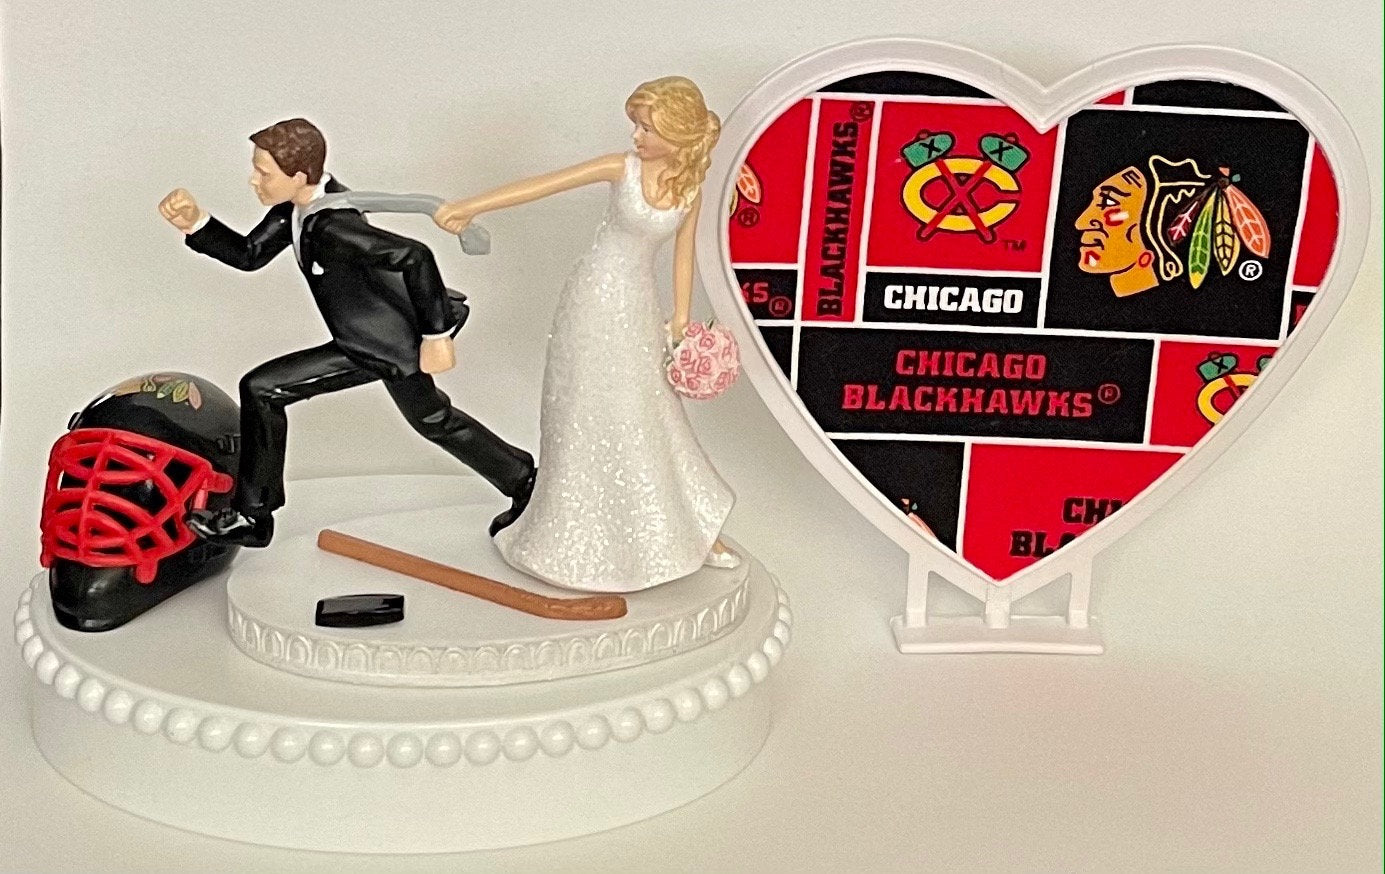 Wedding Cake Topper Chicago Blackhawks Hockey Themed Running Funny Humorous Bride Groom Black Hawks Sports Fan Reception Groom's Cake Top